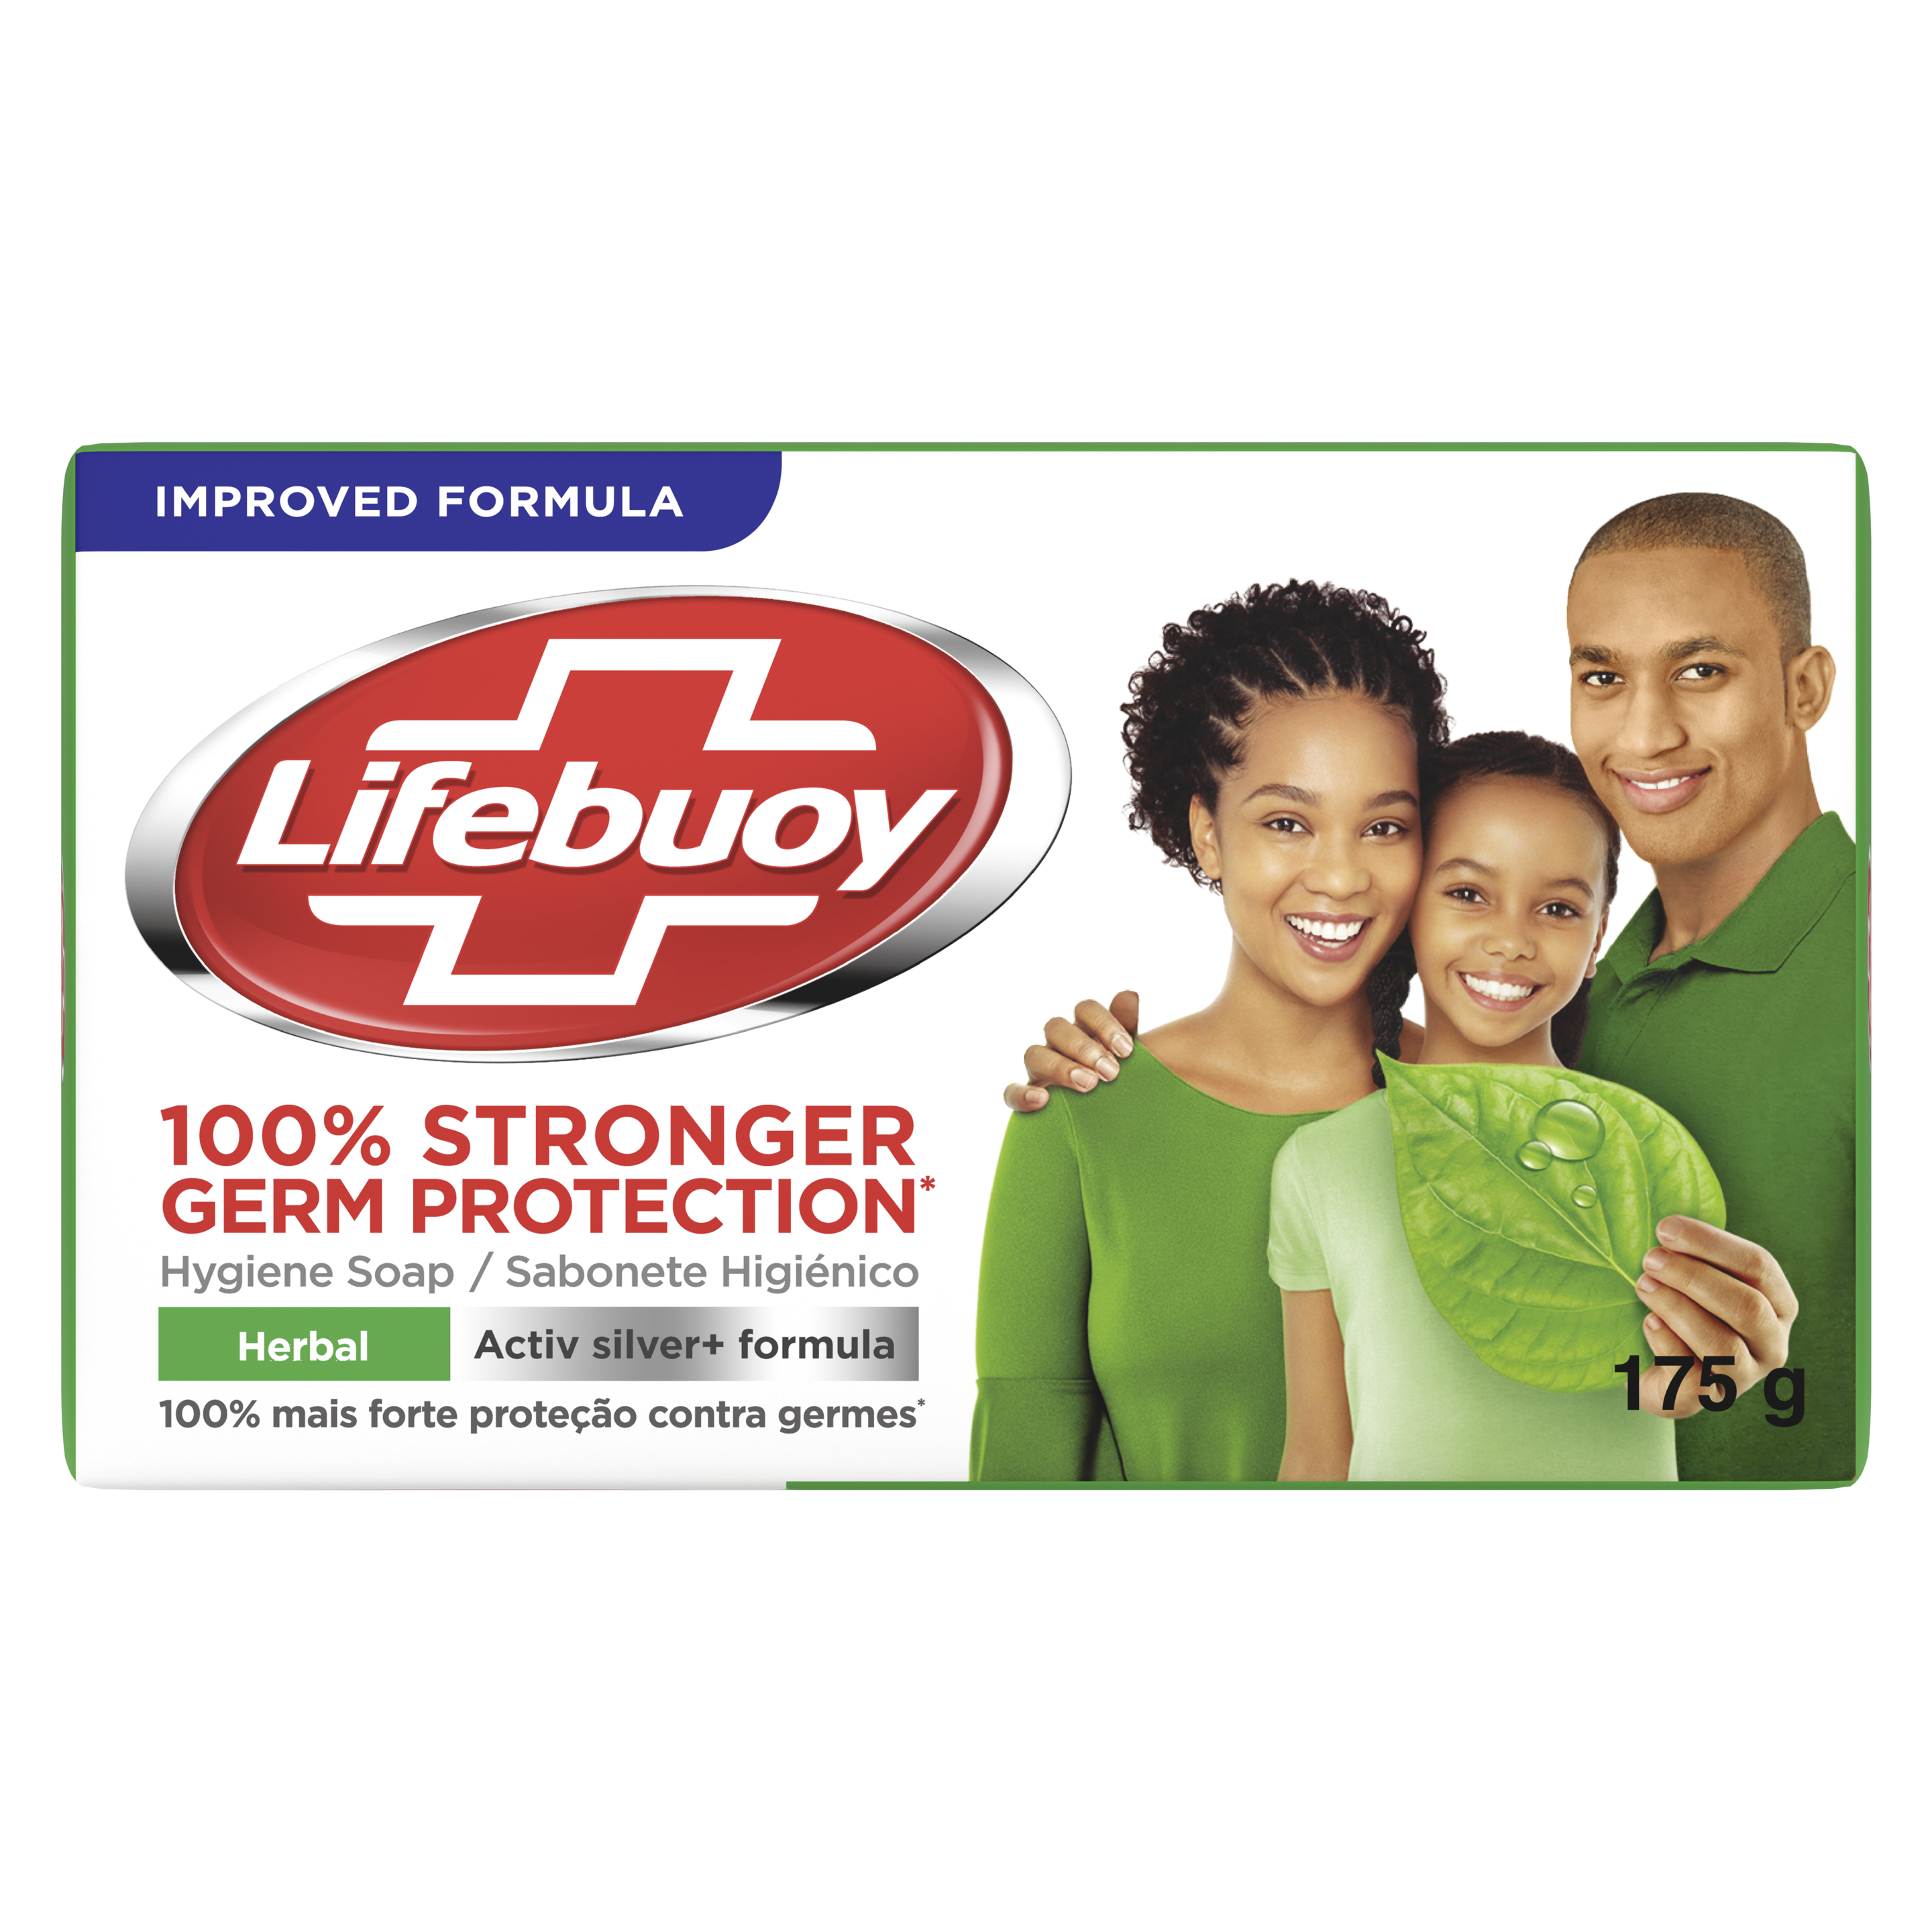 Lifebuoy Herbal Hygiene Bar Soap 175g